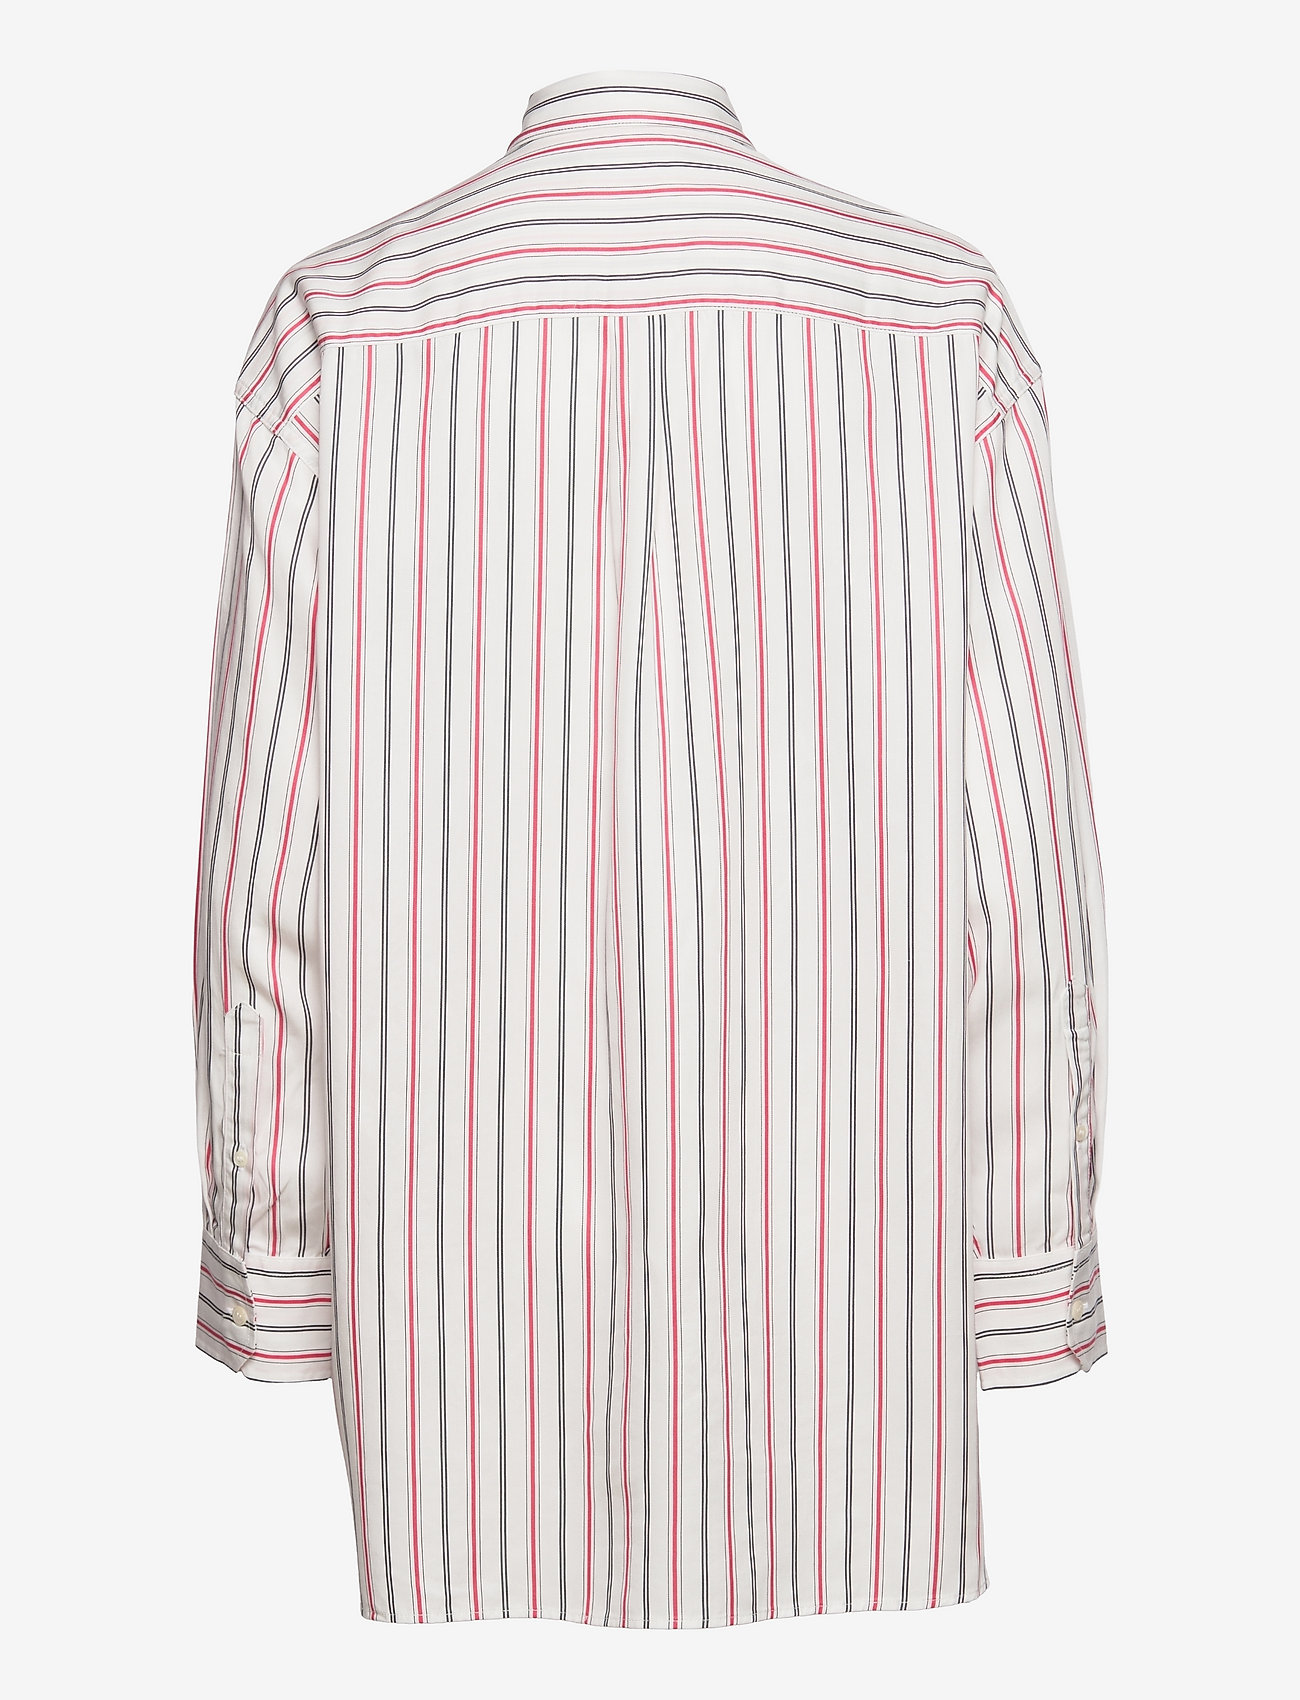 Soulland - Estelle shirt - pitkähihaiset paidat - white/red stripes - 1